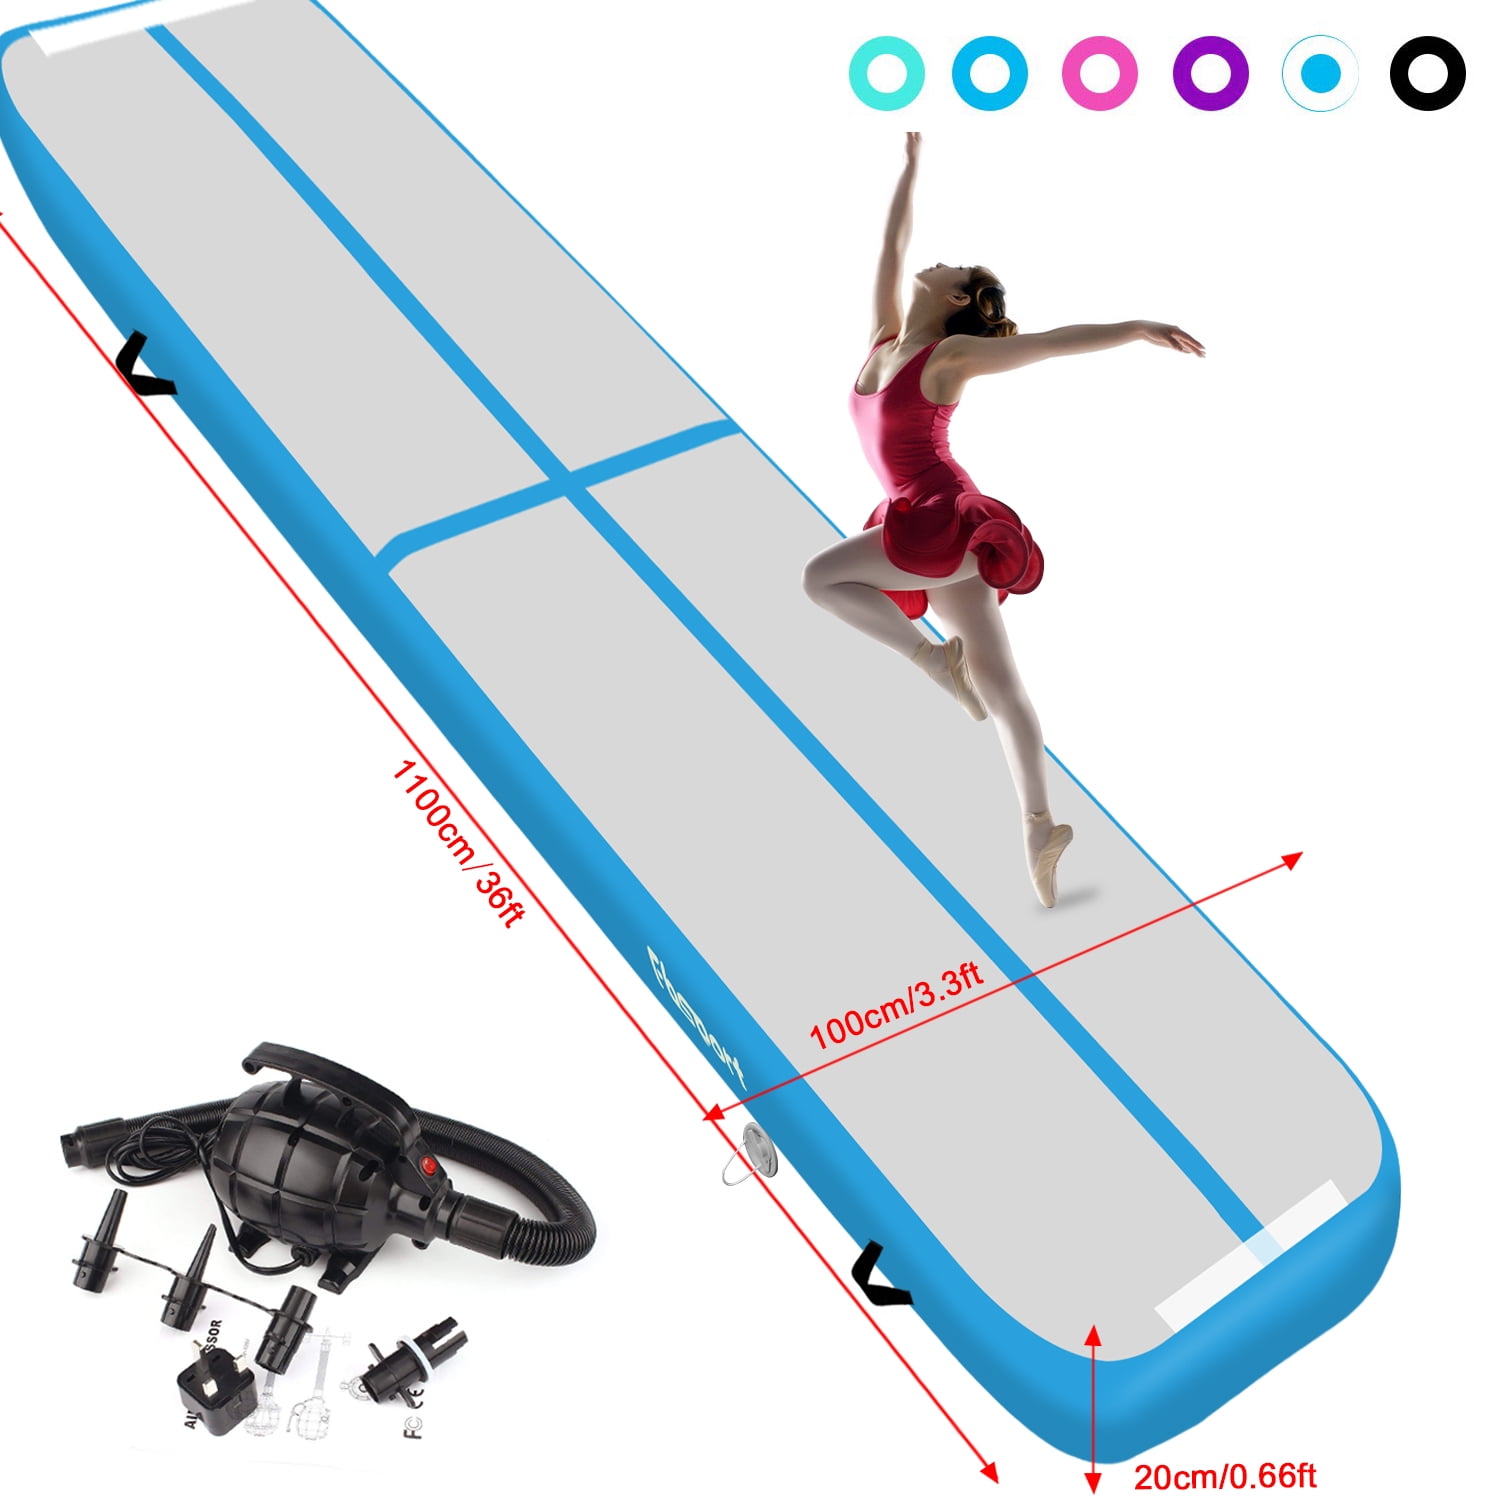 fbsport 20cm Air Gymnastick Track turnmatte Mat aufblasbare tumbling matte Pump 